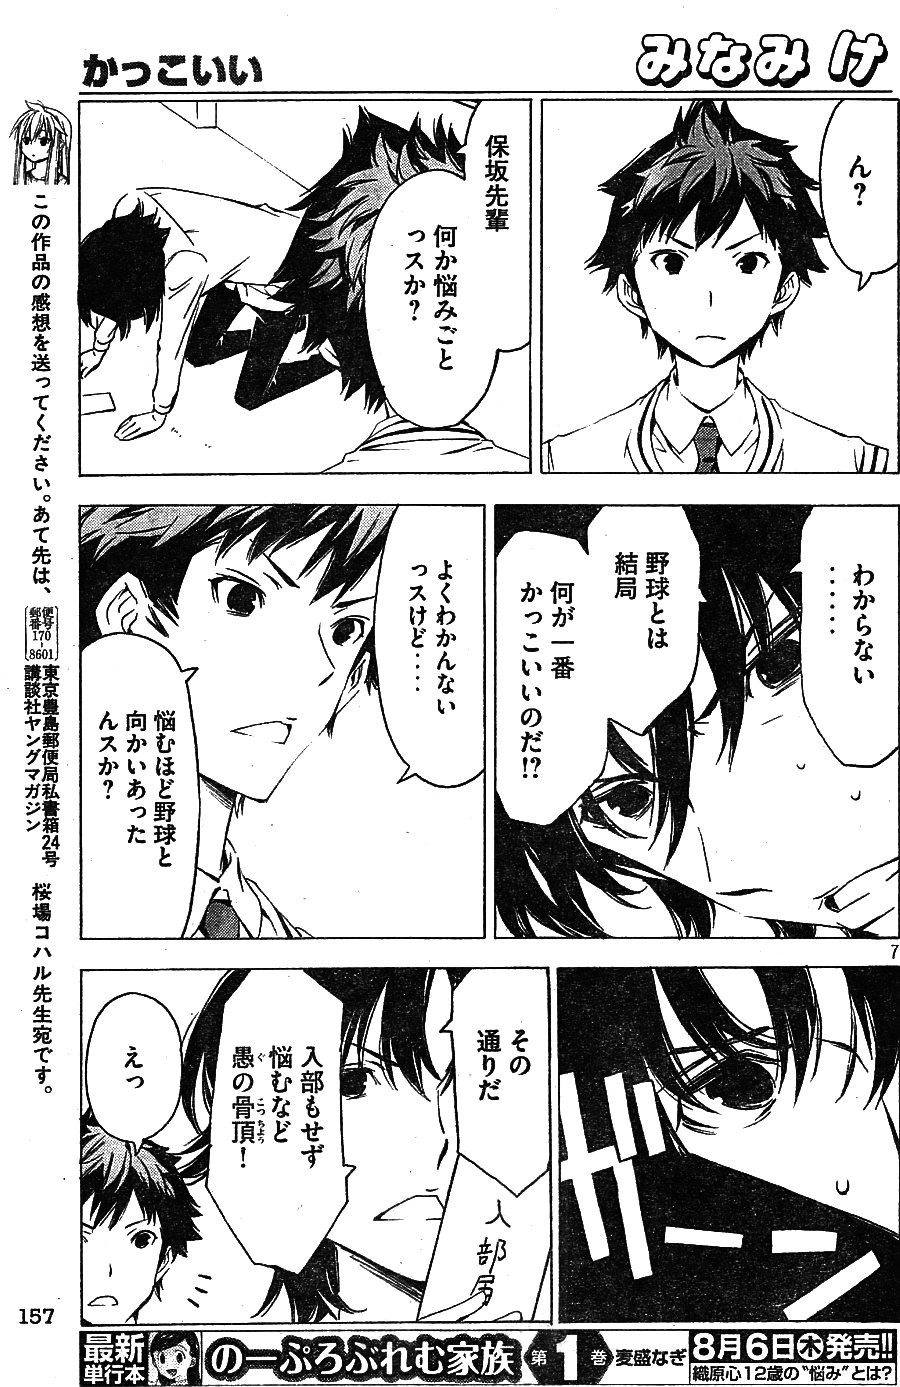 Minami-ke - Chapter 273 - Page 7